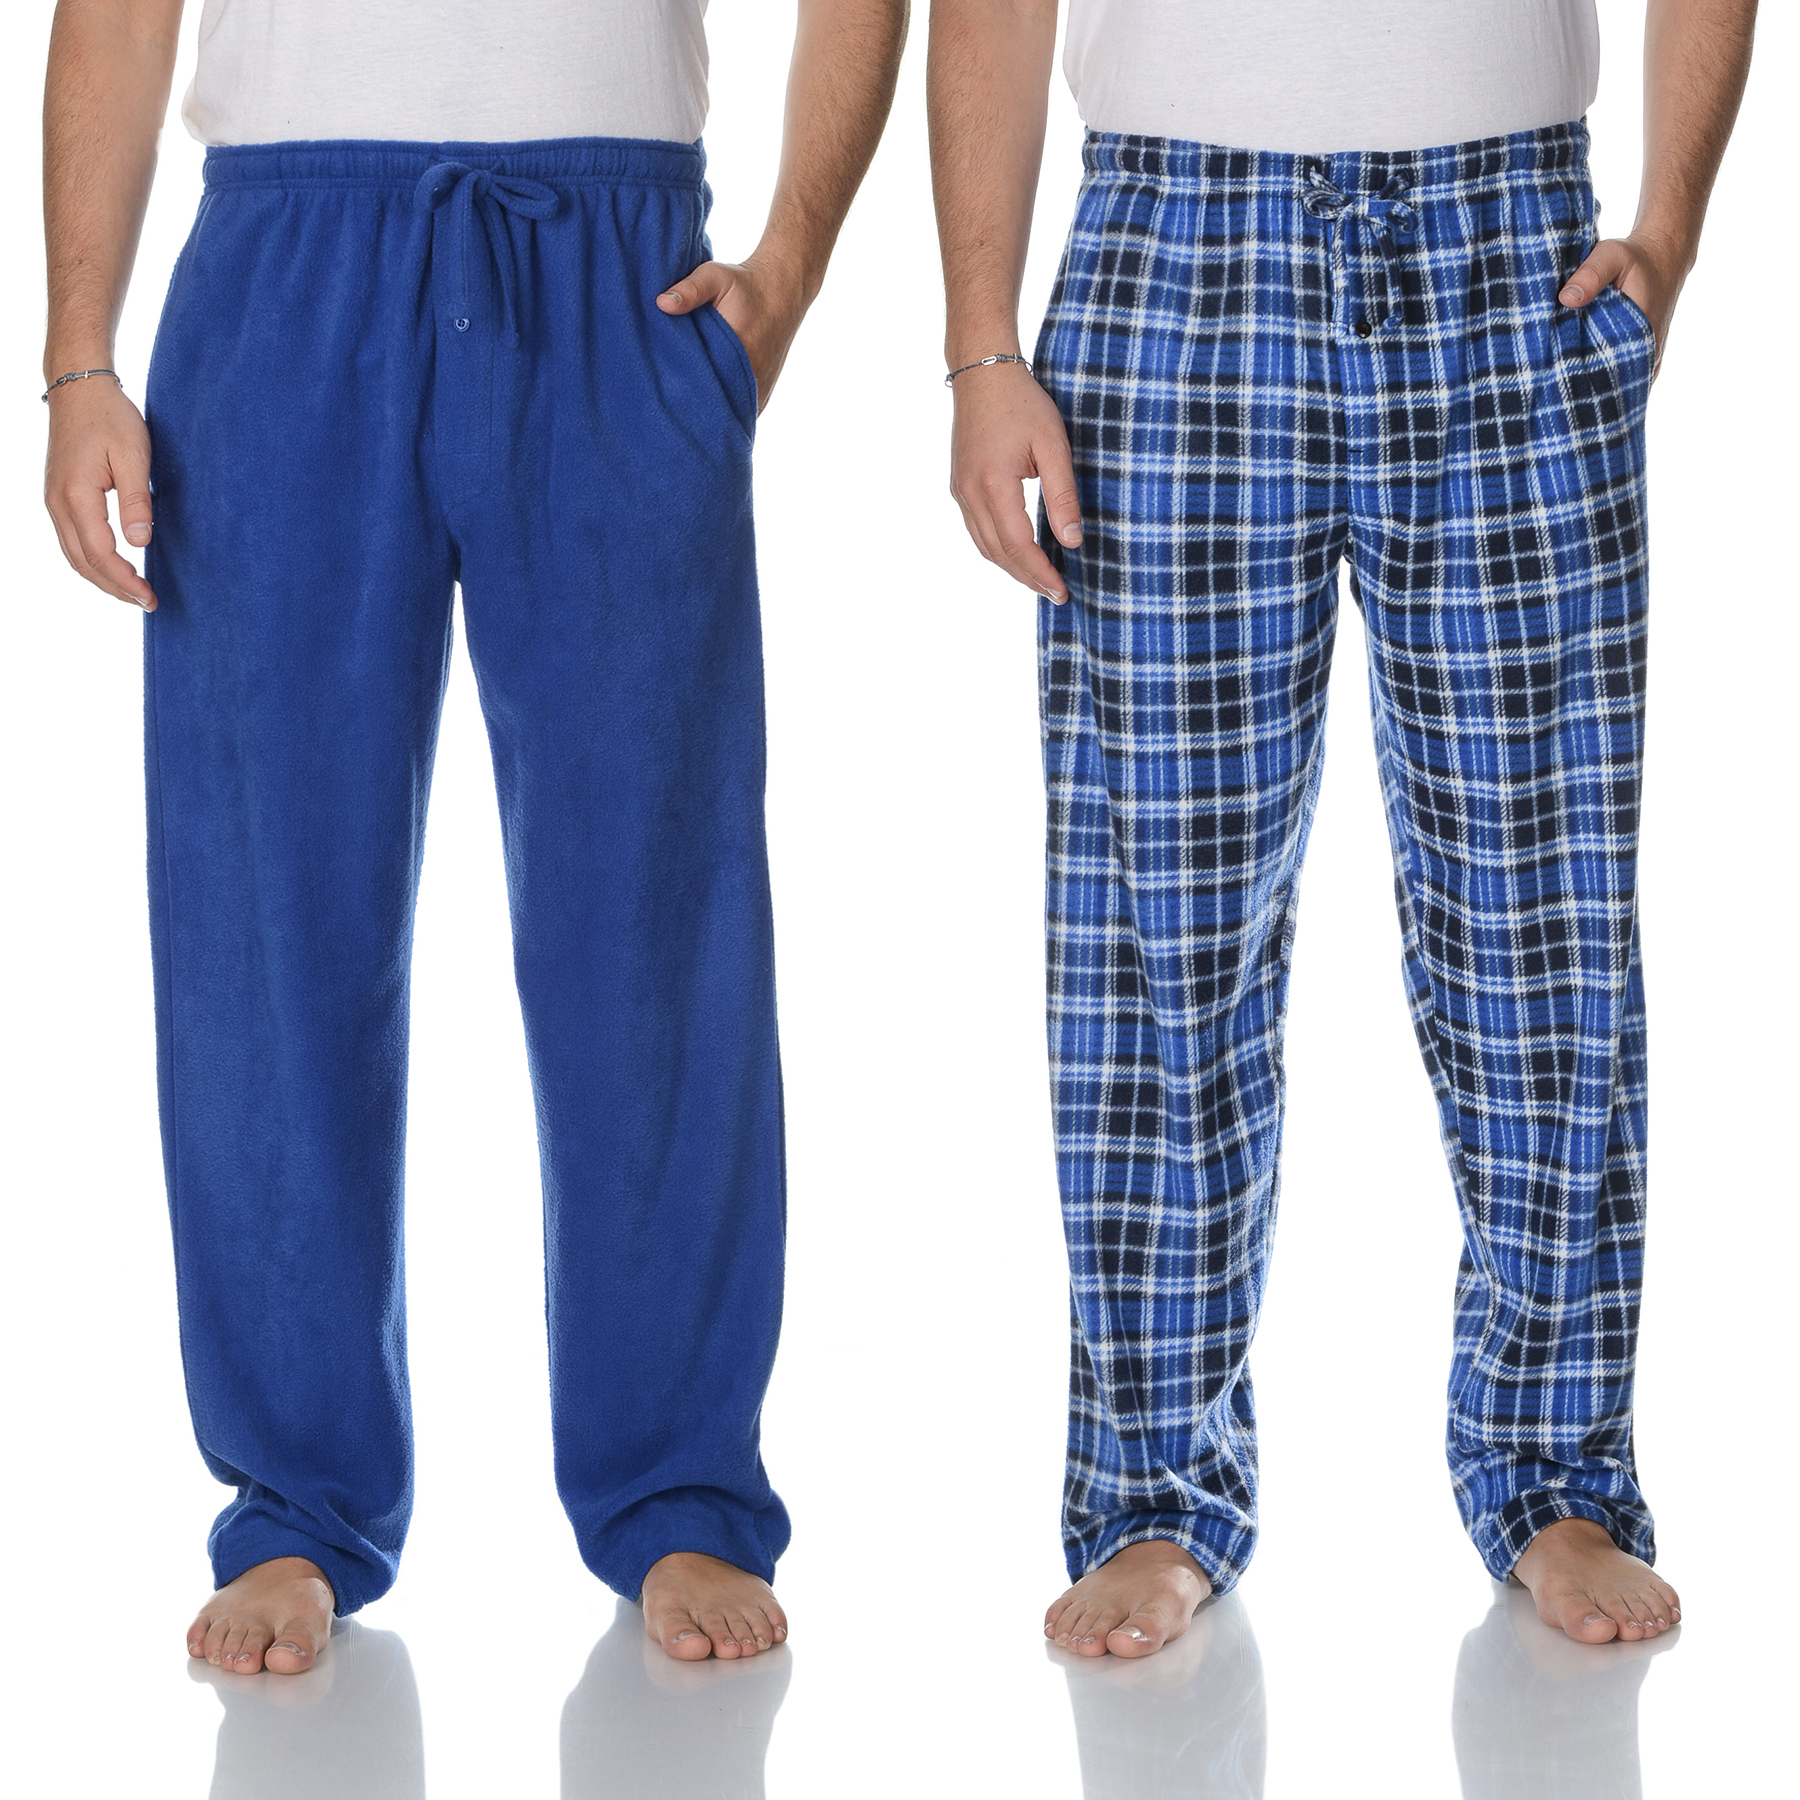 Men's Big & Tall 2PK Solid Navy/Blue Plaid Fleece Pants - Online Exclusive